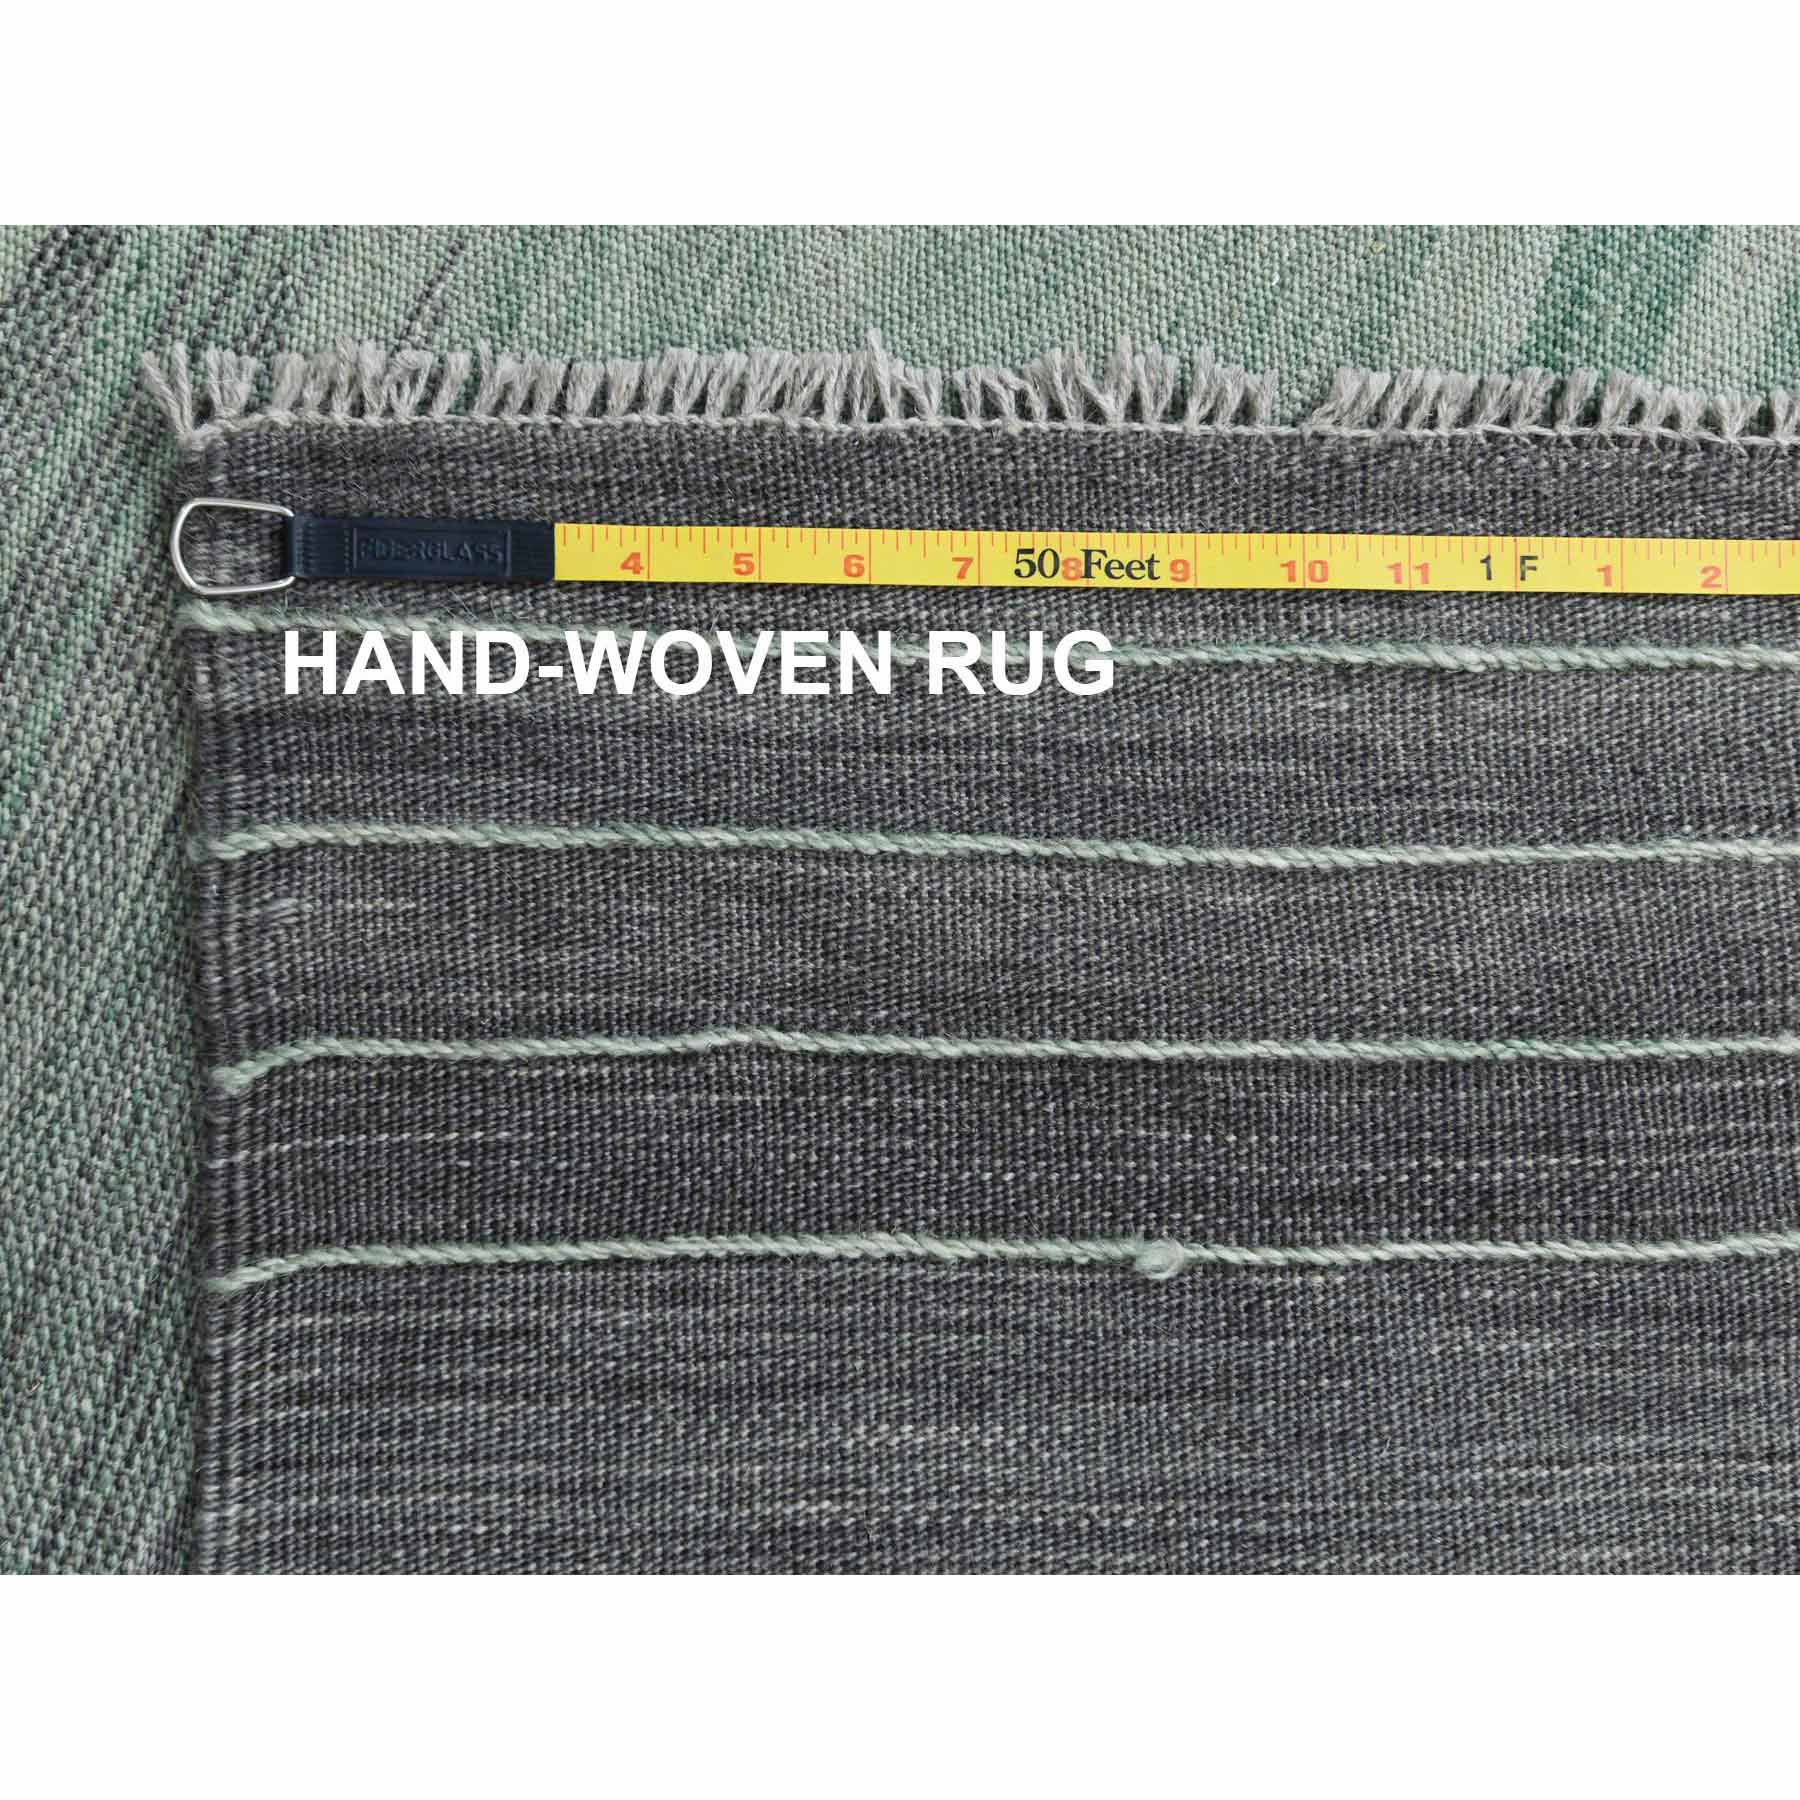 Flat-Weave-Hand-Woven-Rug-300100